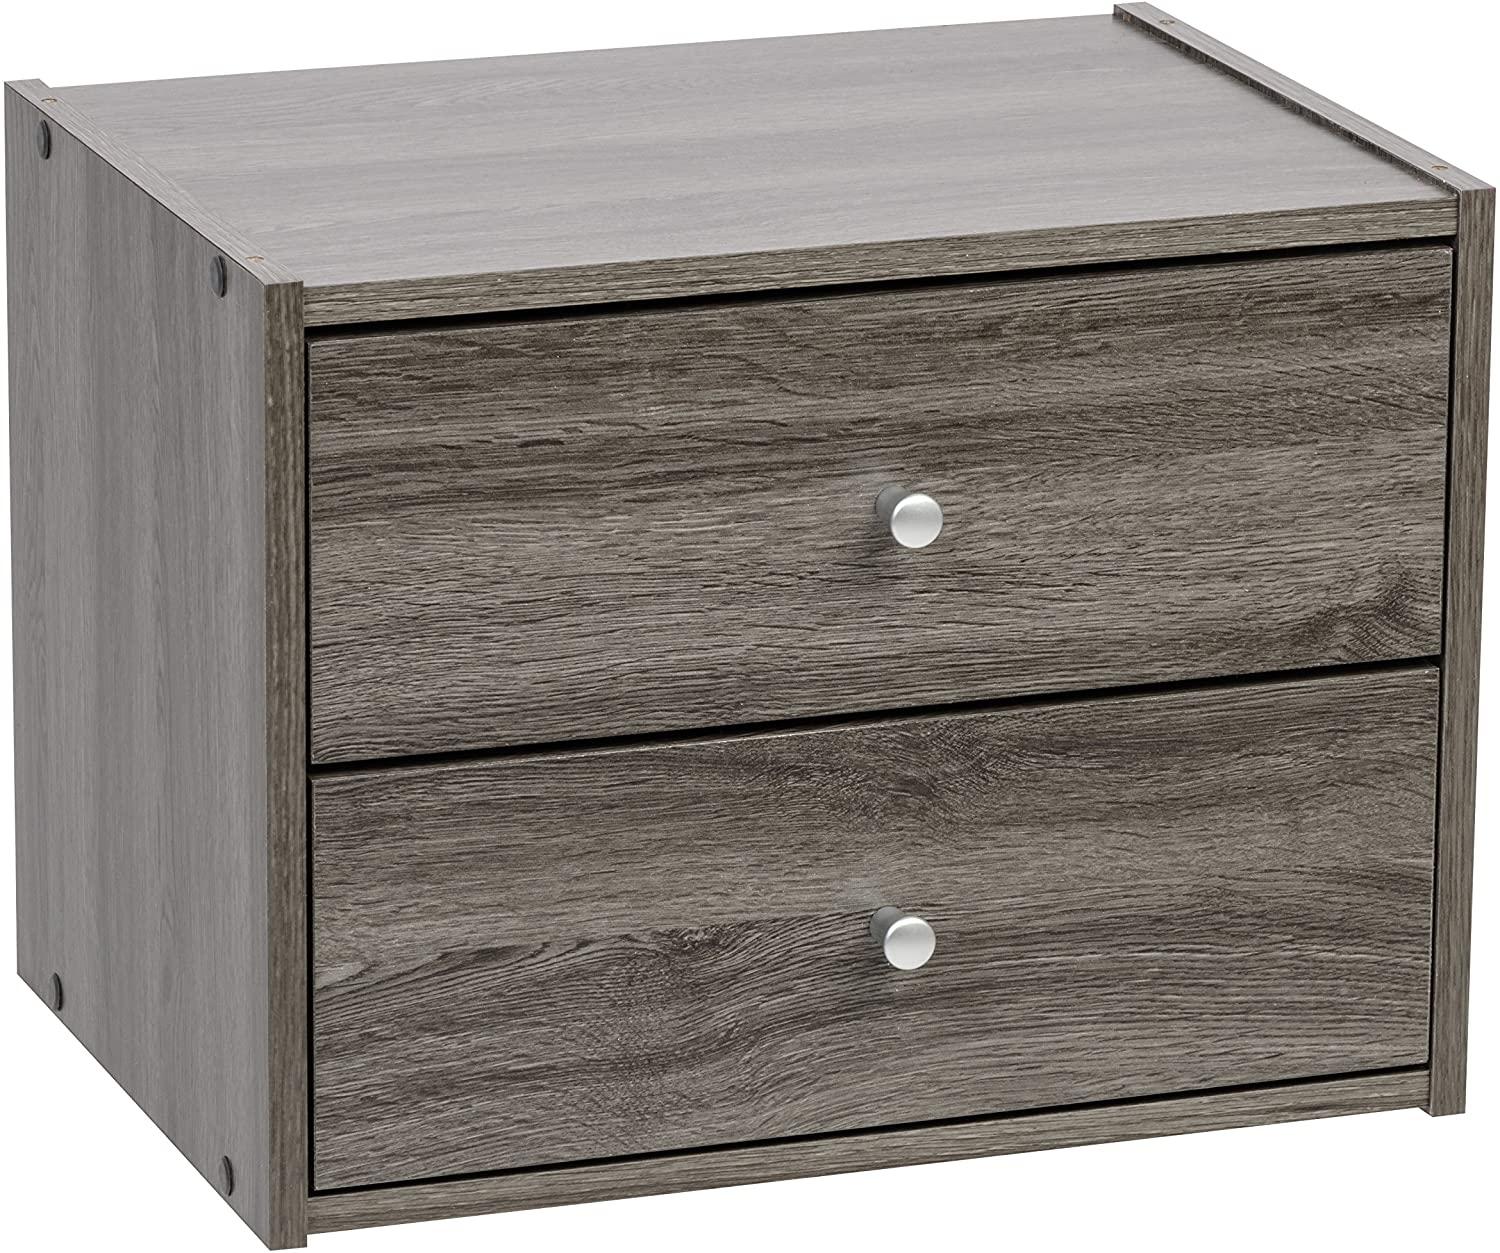 IRIS USA SBDR Modular Wood Stacking Storage Box with Drawer for $24.99